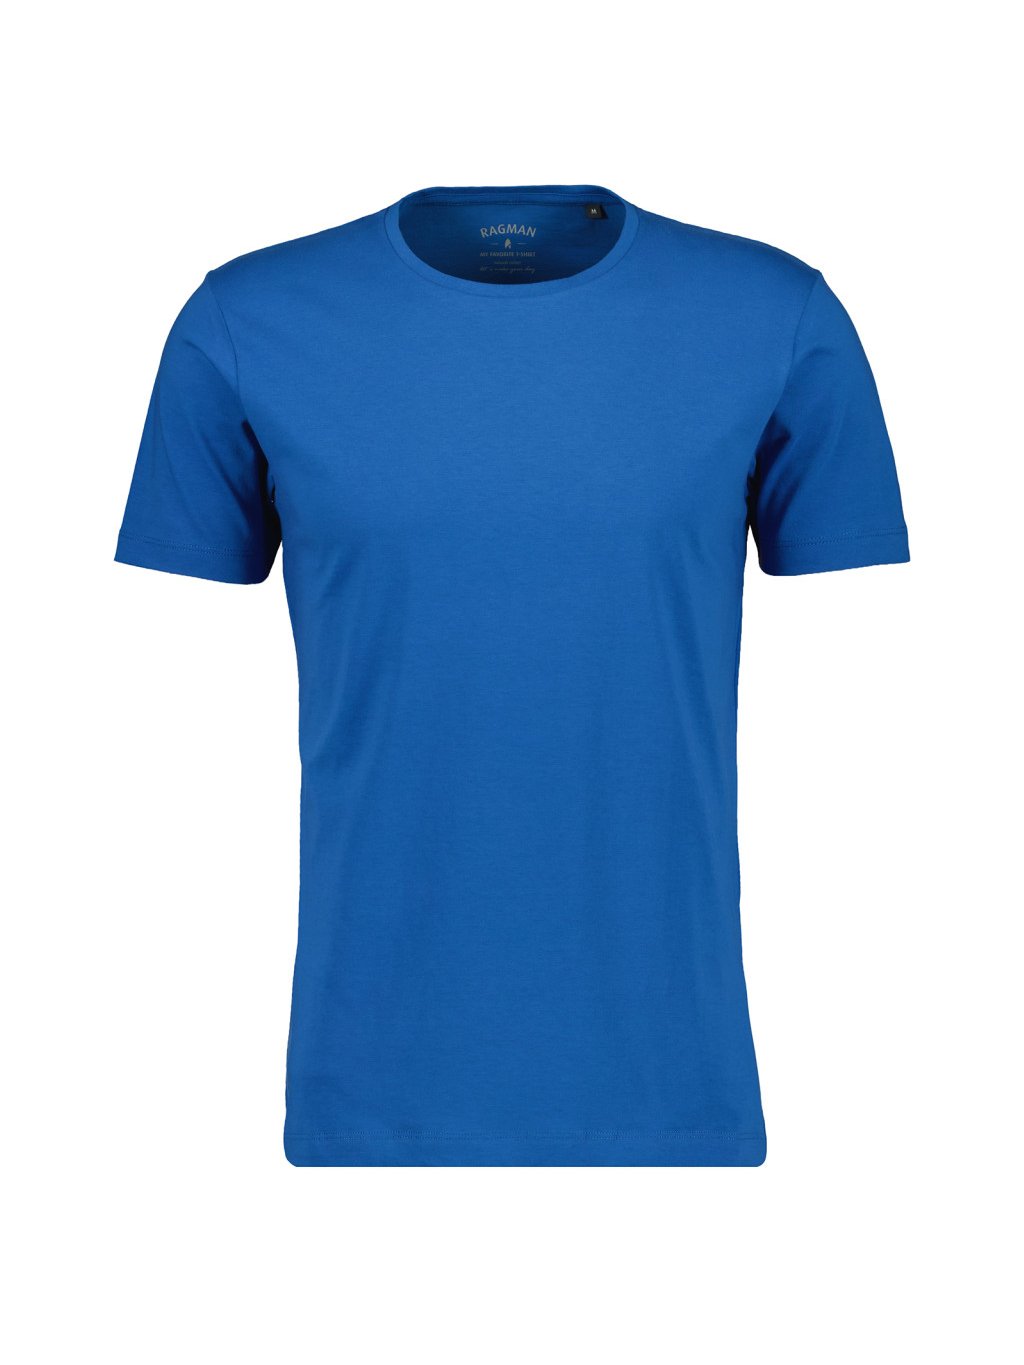 Tričko Ragman 403080 modré